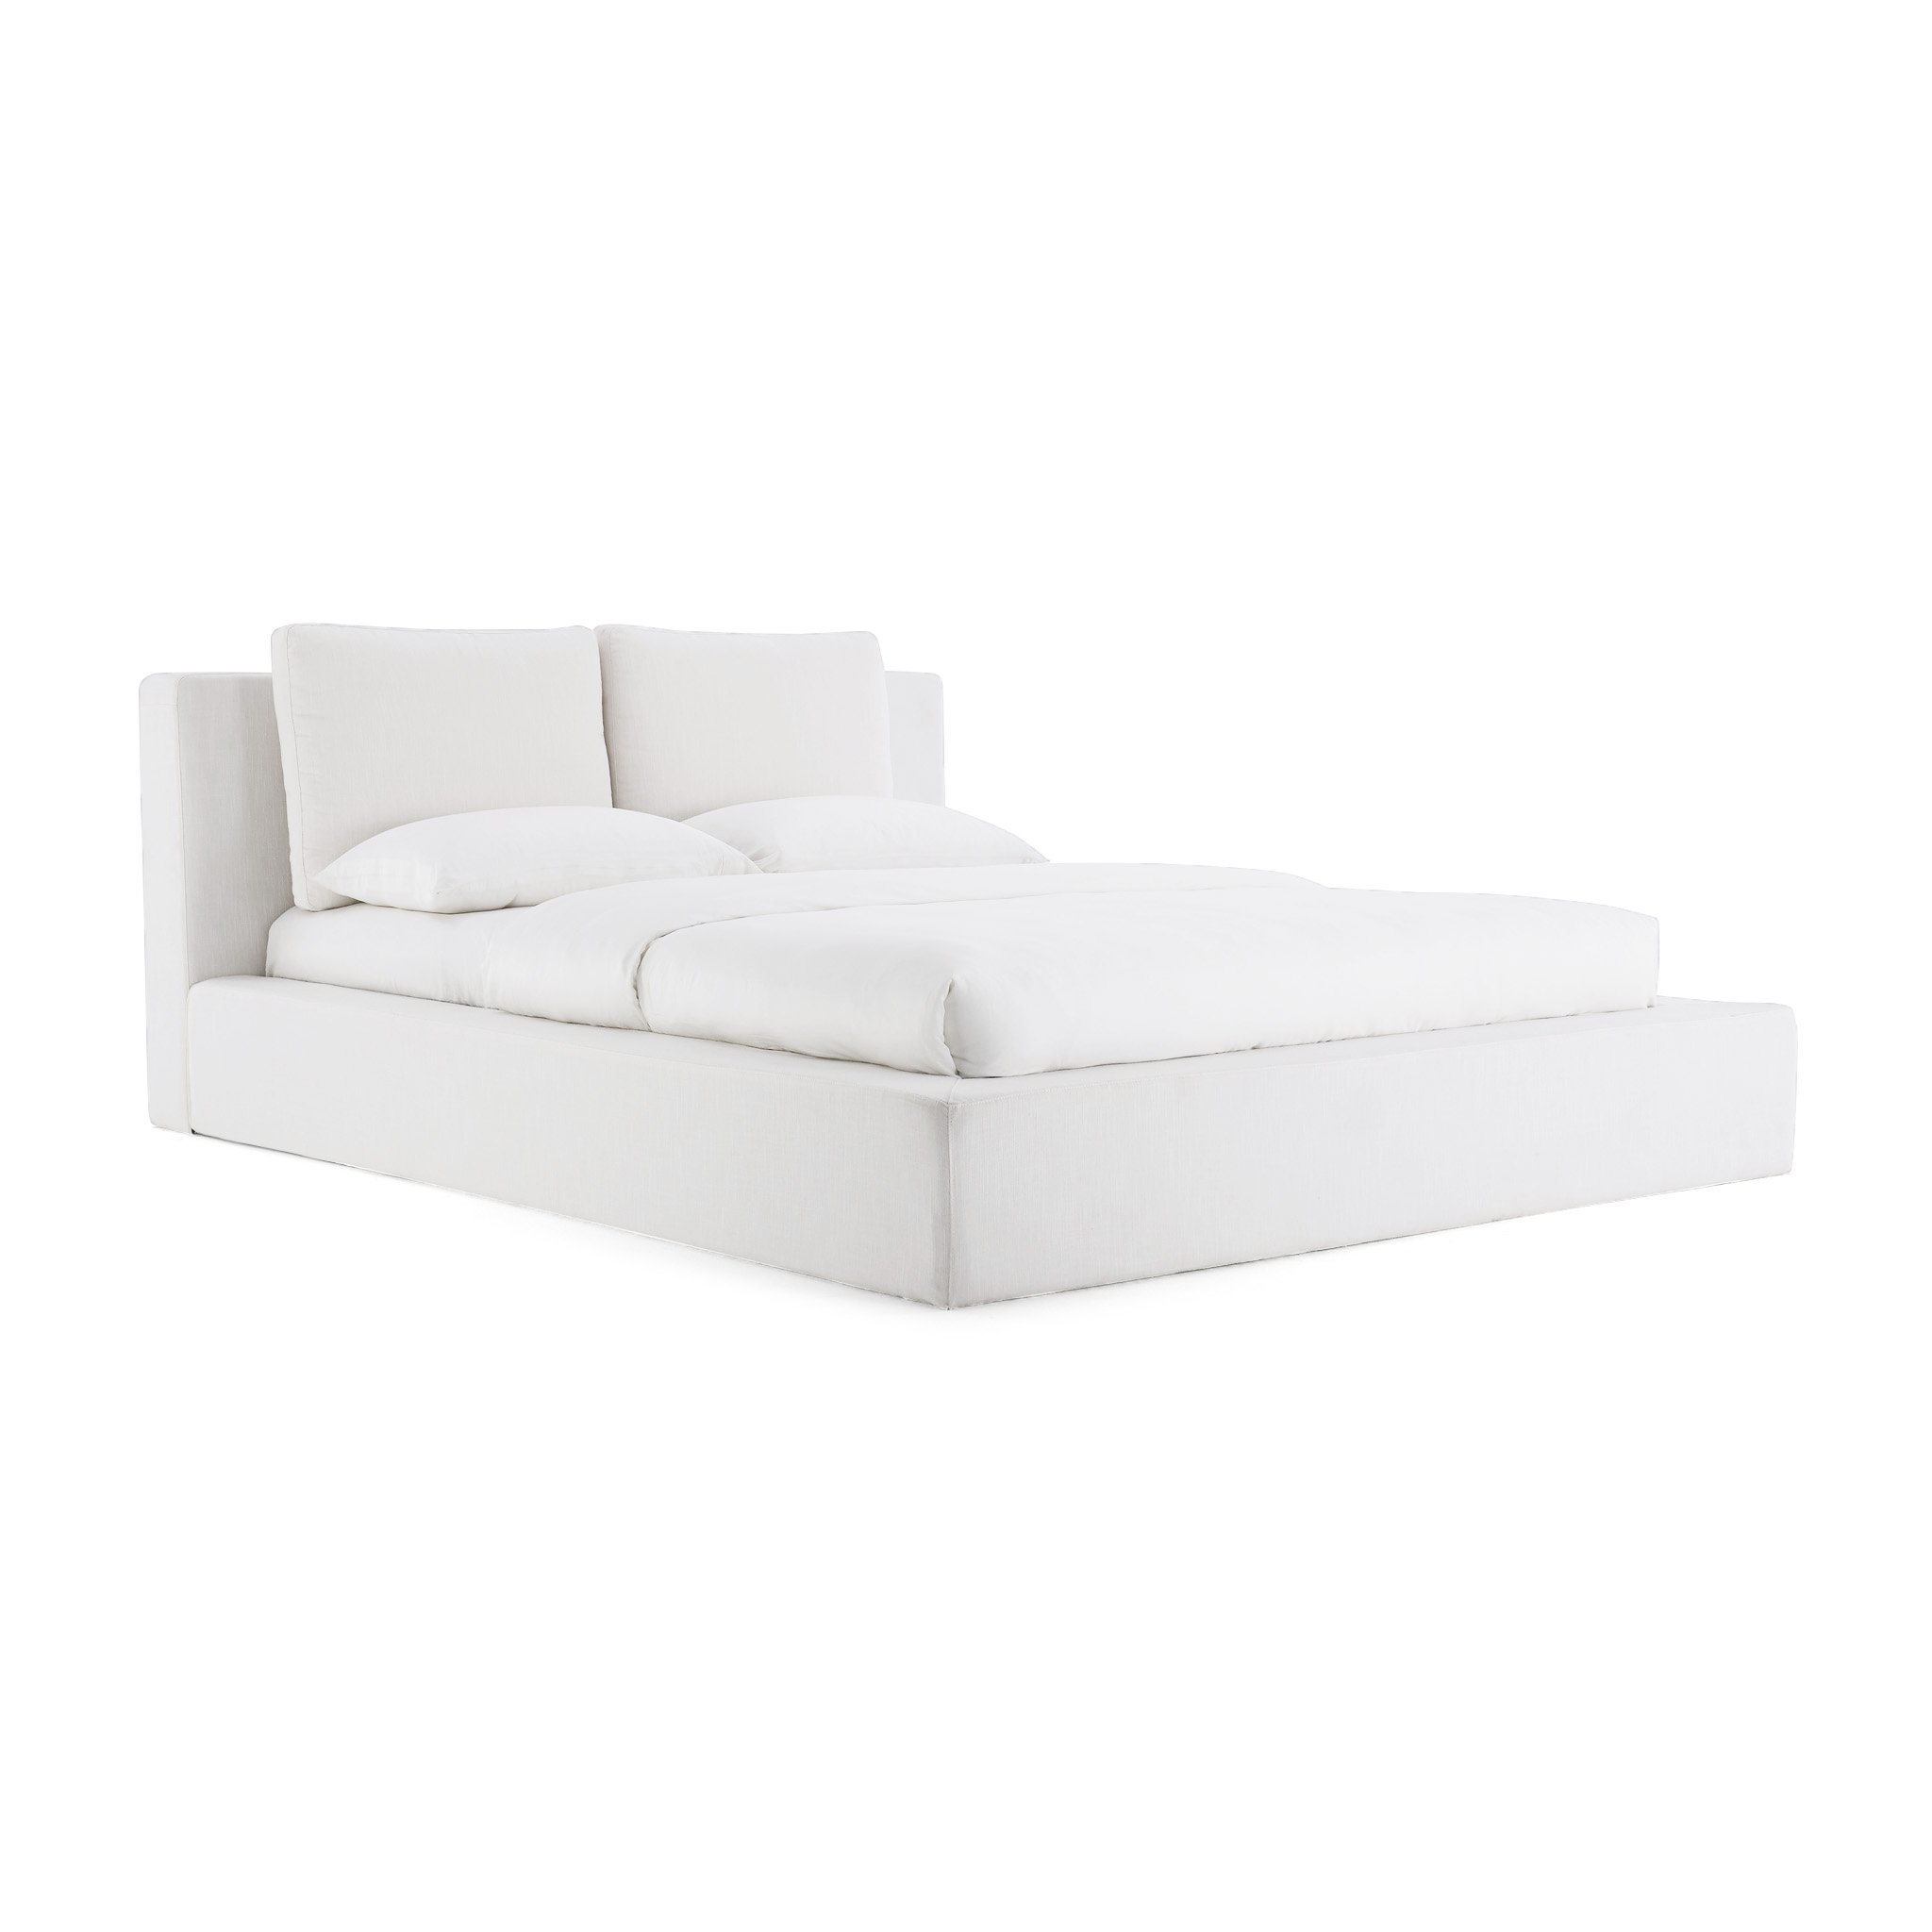 EM Sky Bed Textured Linen Weave-White / King Size